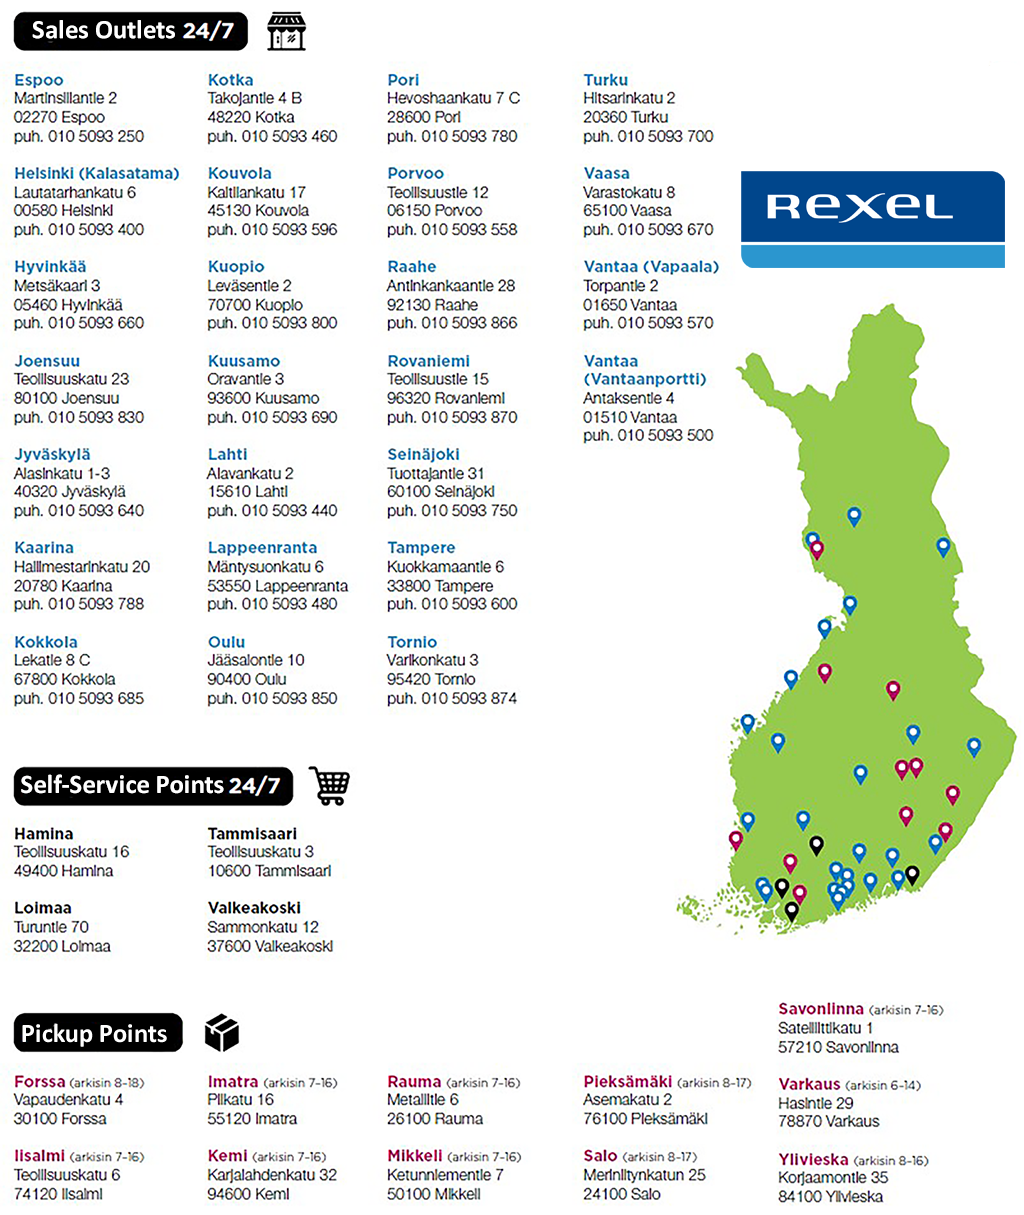 Finland Distributors